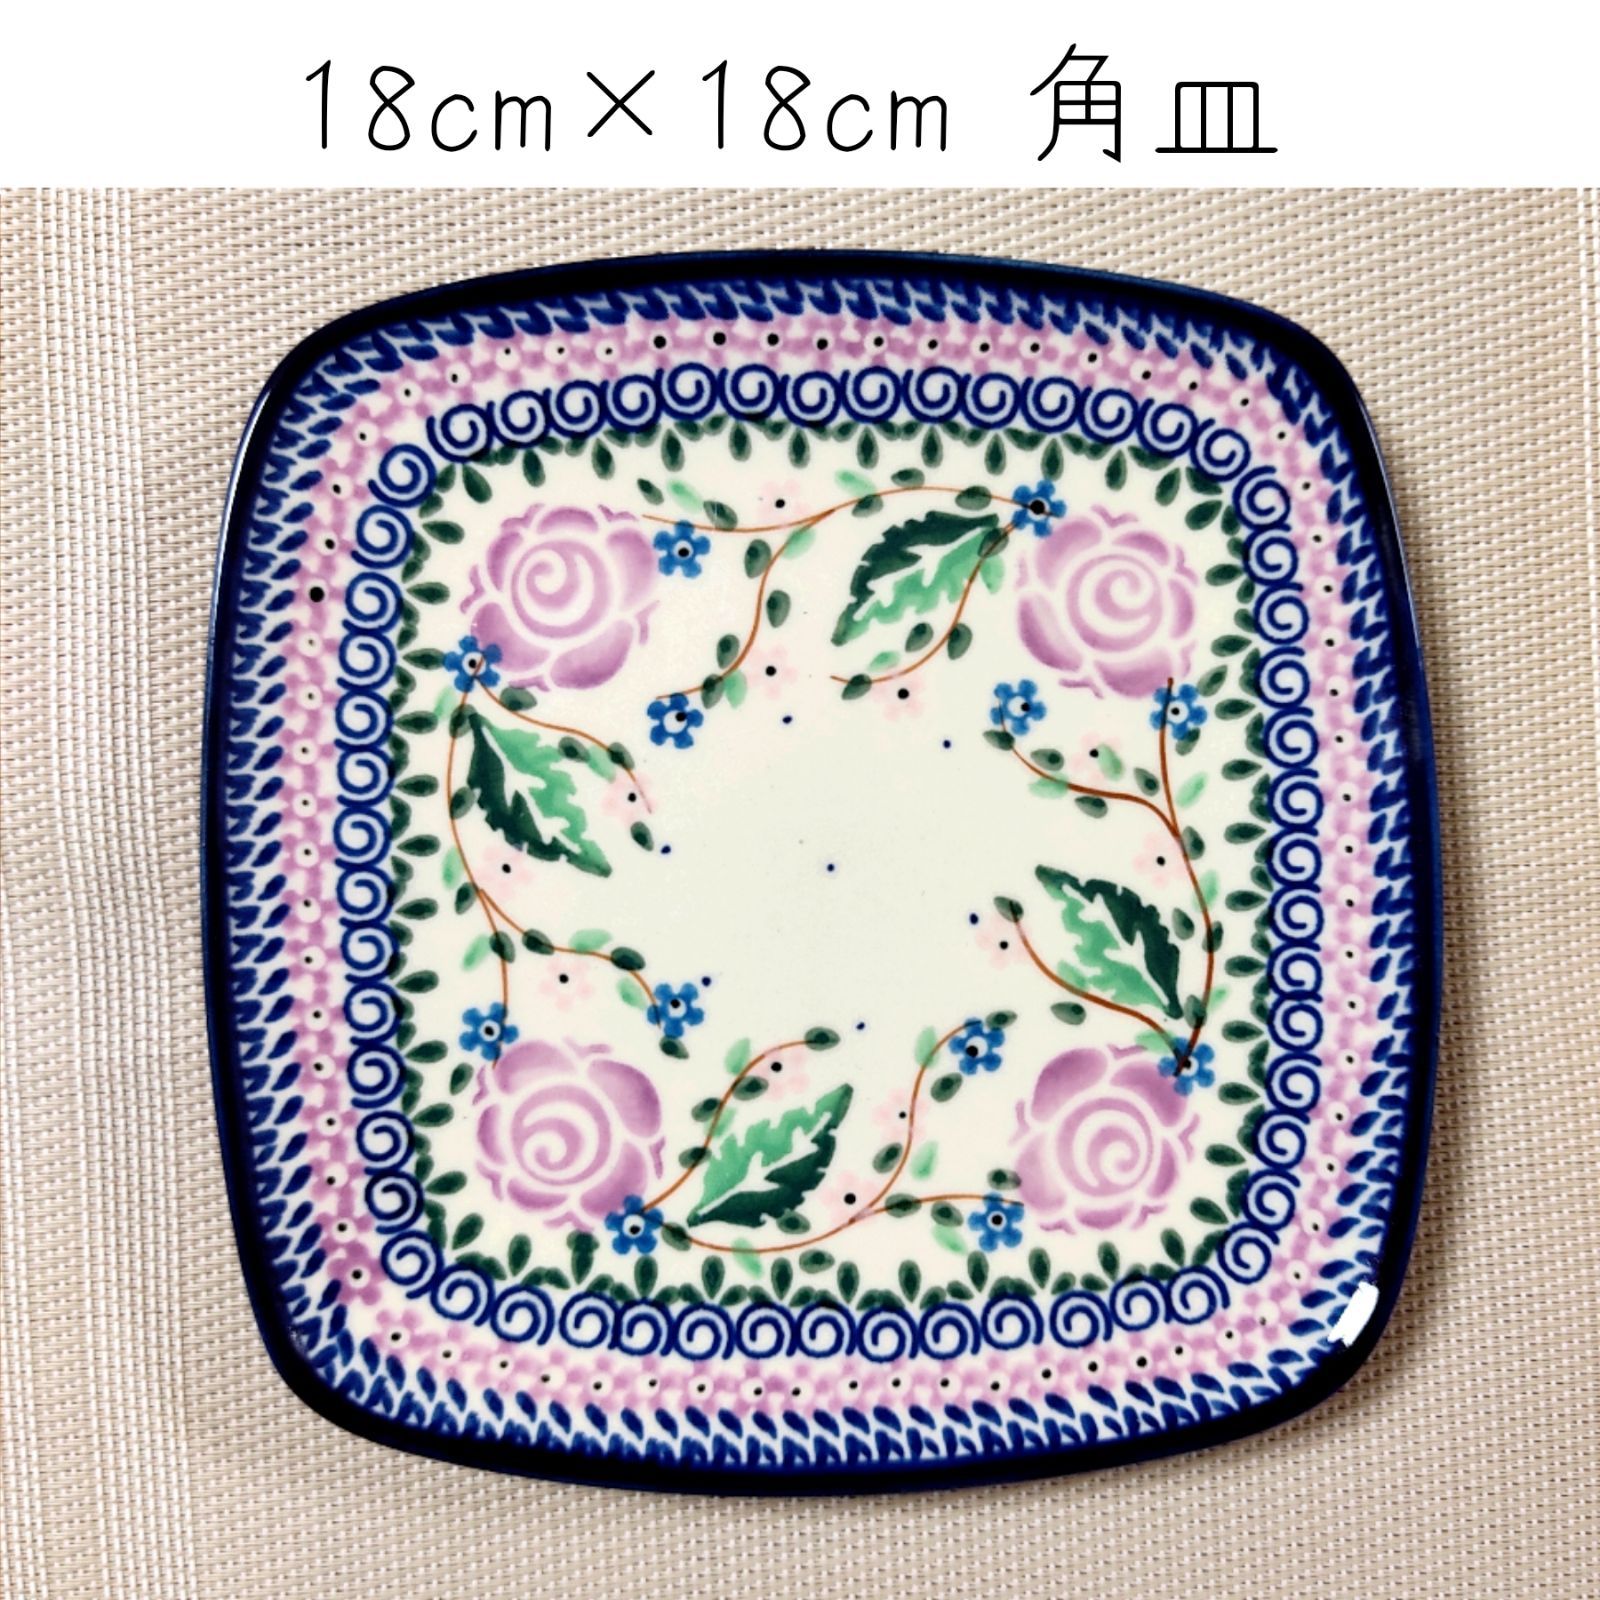 18cm×18cm 角皿 スクエアプレート 紫のバラ模様 ミレナ Millena